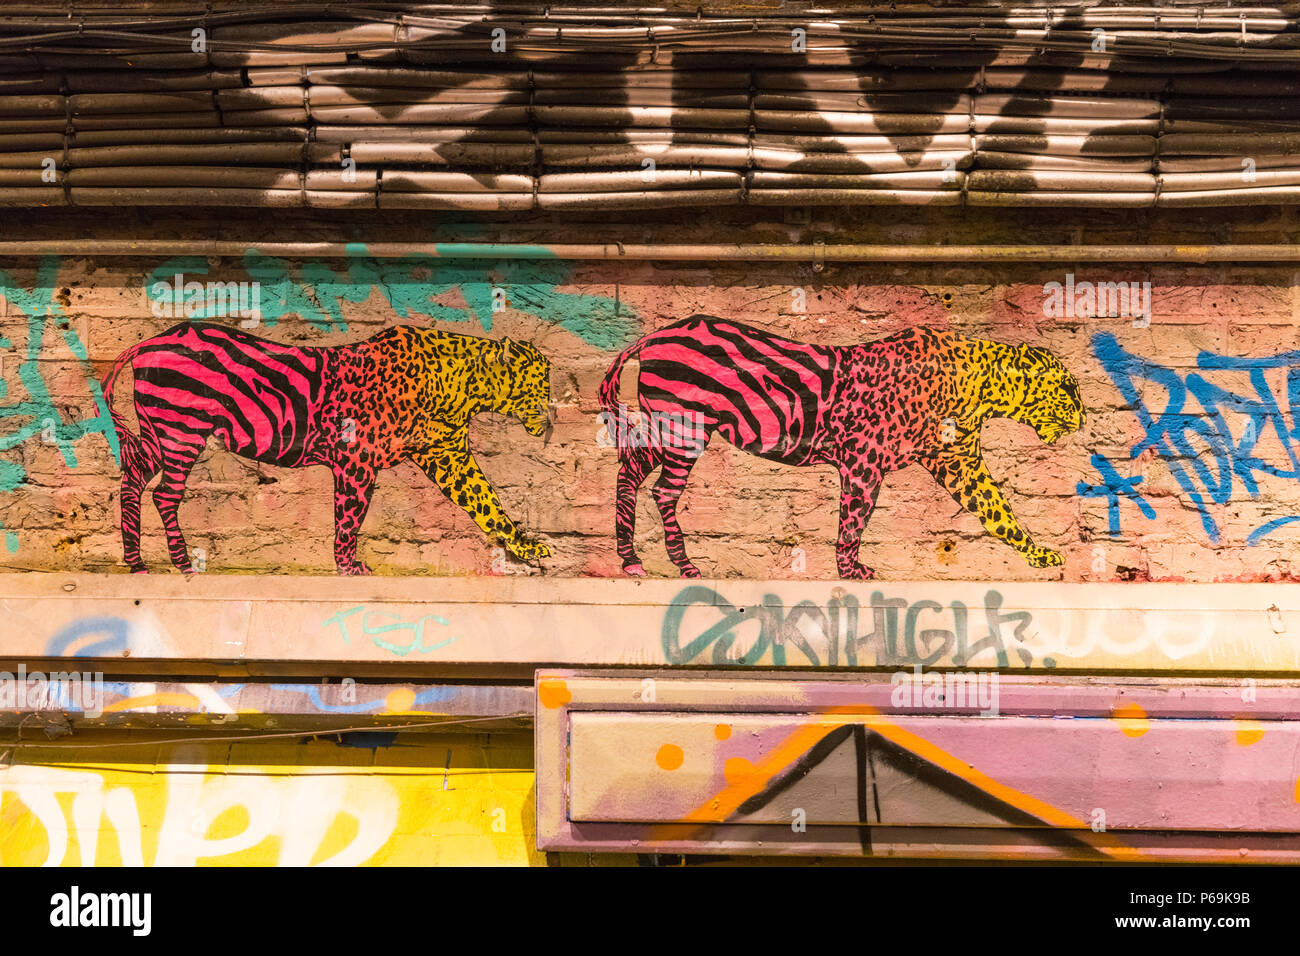 London Waterloo Leake Street 2 graffiti deux animaux partie partie rose rose & jaune zebra leopard cheetah on wall Banque D'Images